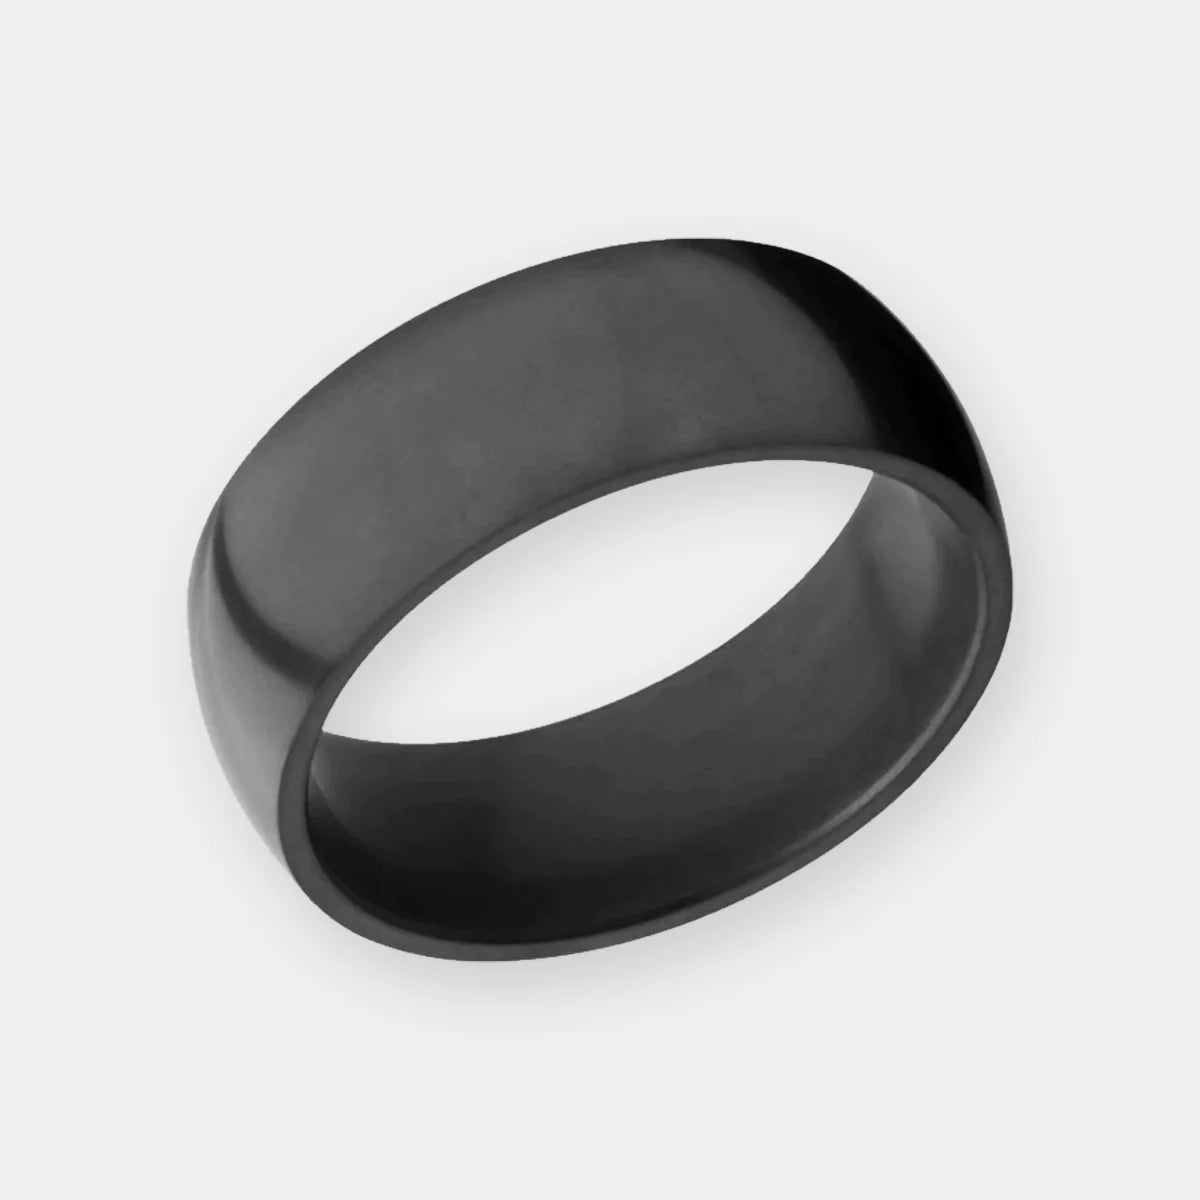 Solid Black Diamond 8mm Men's Wedding Ring on White Background | Elysium Black Diamond Ring - Elysium NYX 8mm - Solid Black Diamond Ring | Products | Image 1